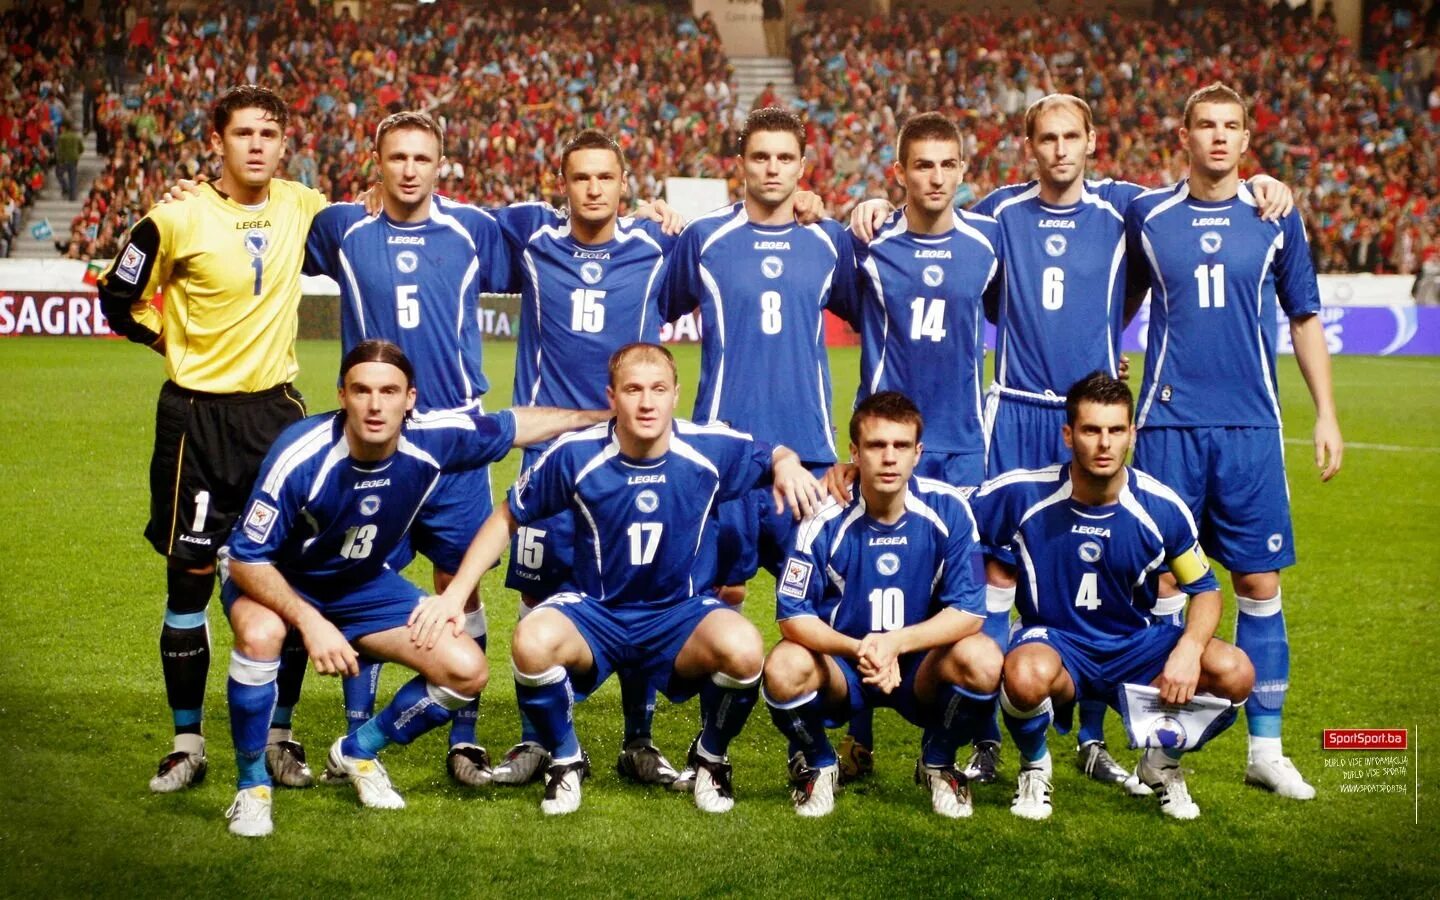 Команды футбола. Фото футбольной команды. Футбольные команды Европы. Европейские команды по футболу.